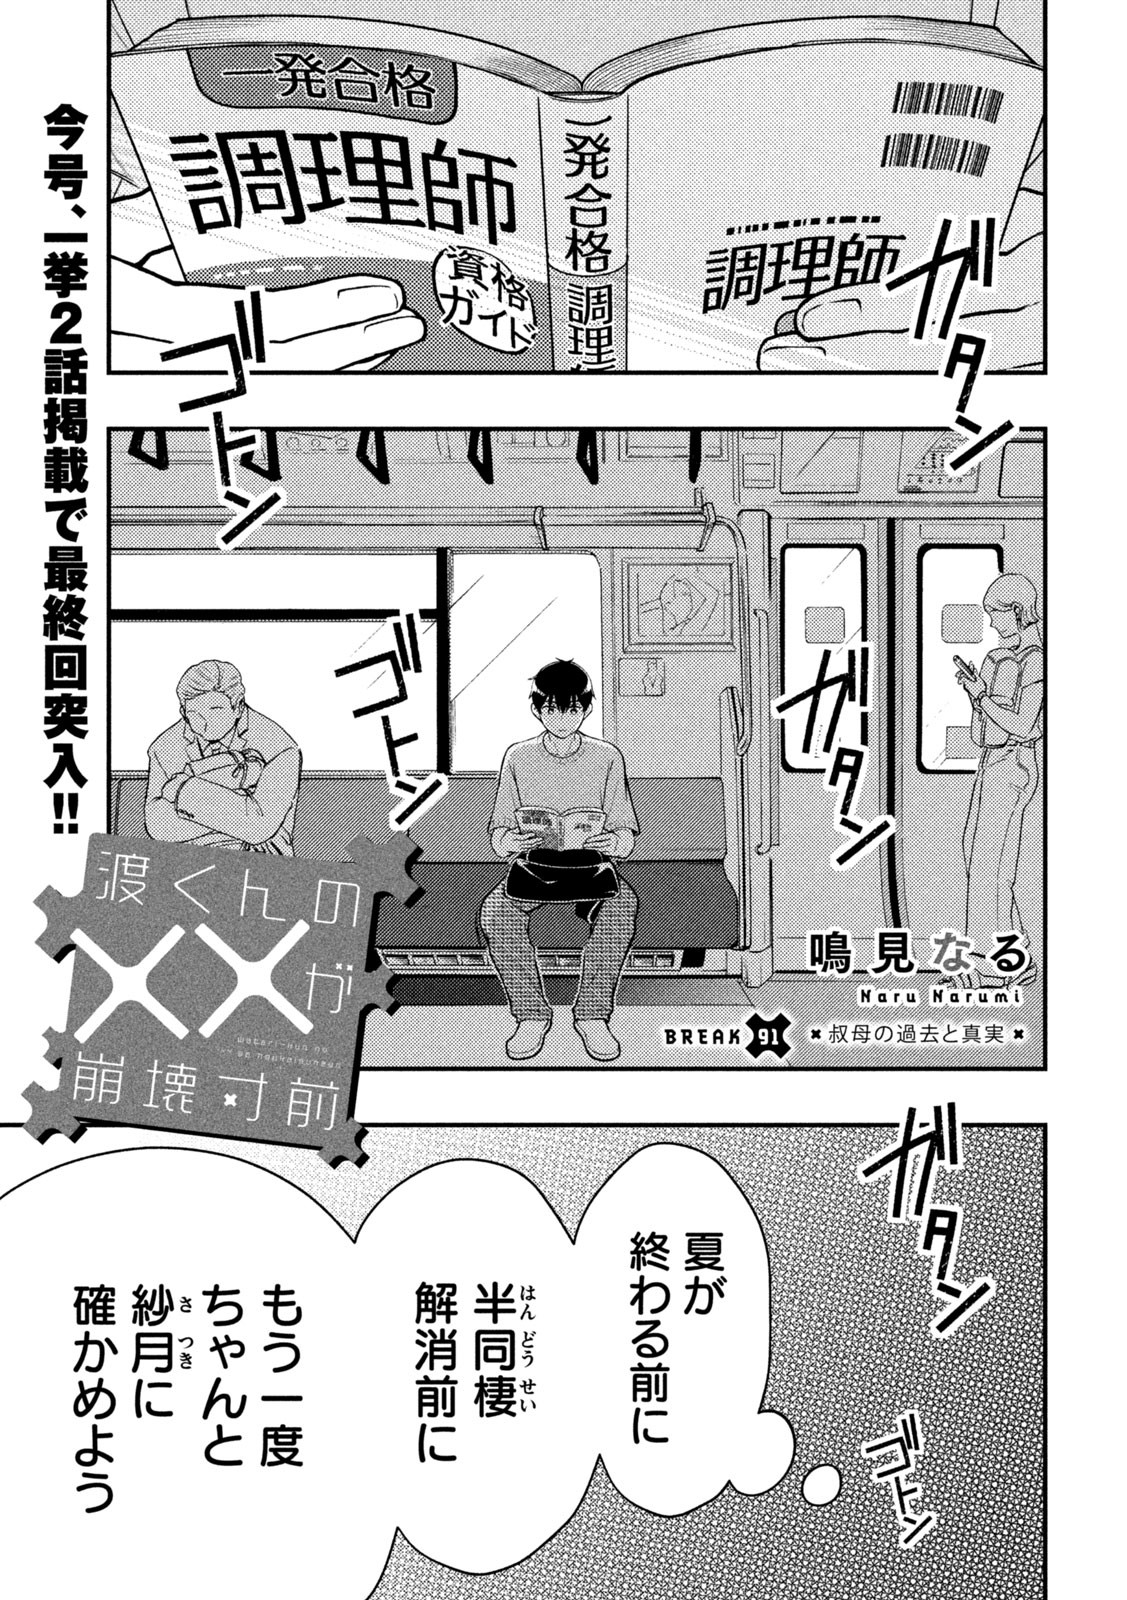 Watari-kun no xx ga Houkai Sunzen - Chapter 91 - Page 1